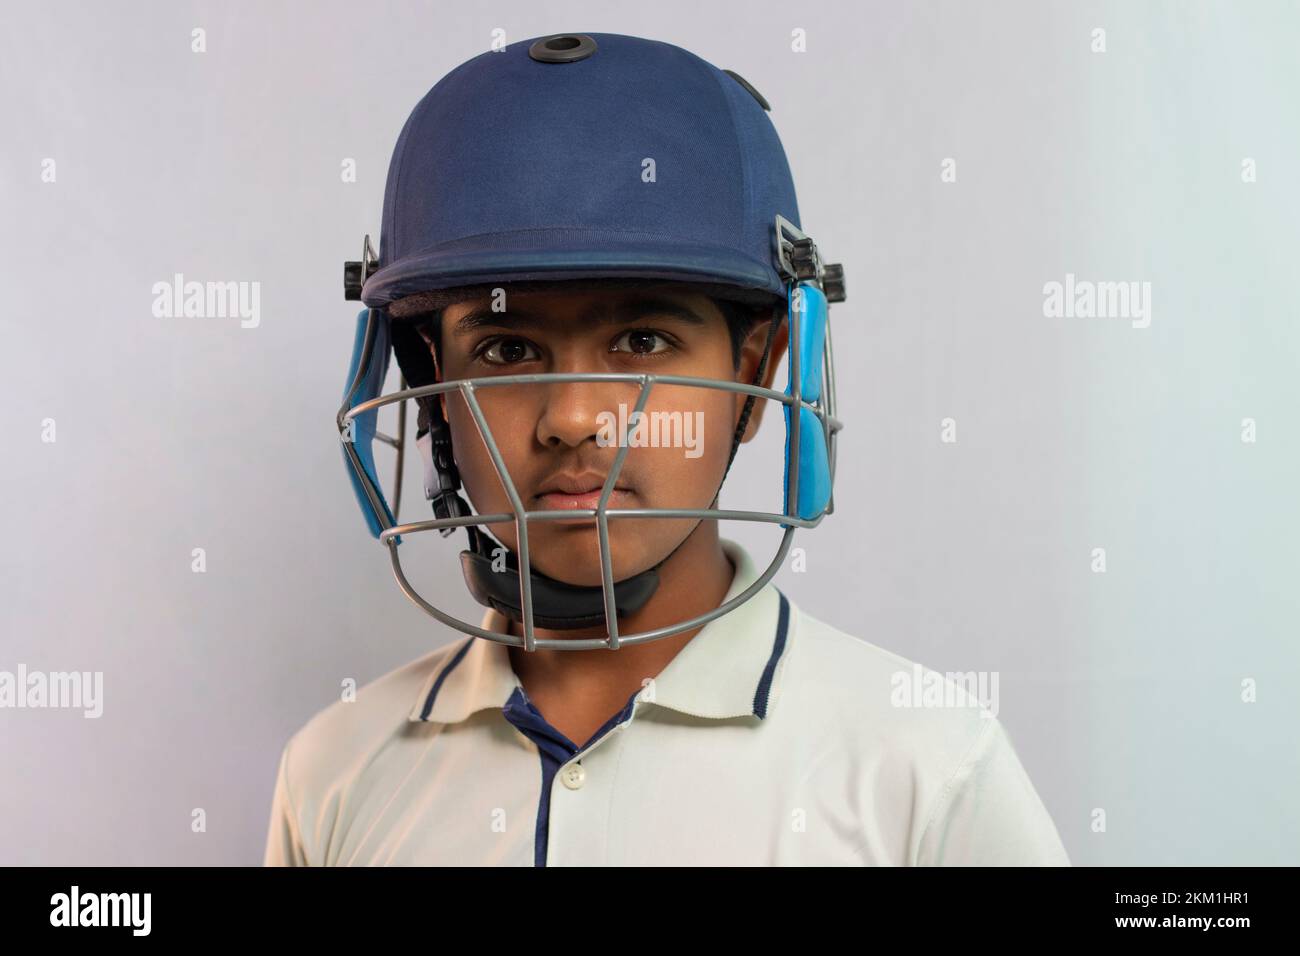 Portrait of boy wearing cricket Helmet Stock Photo